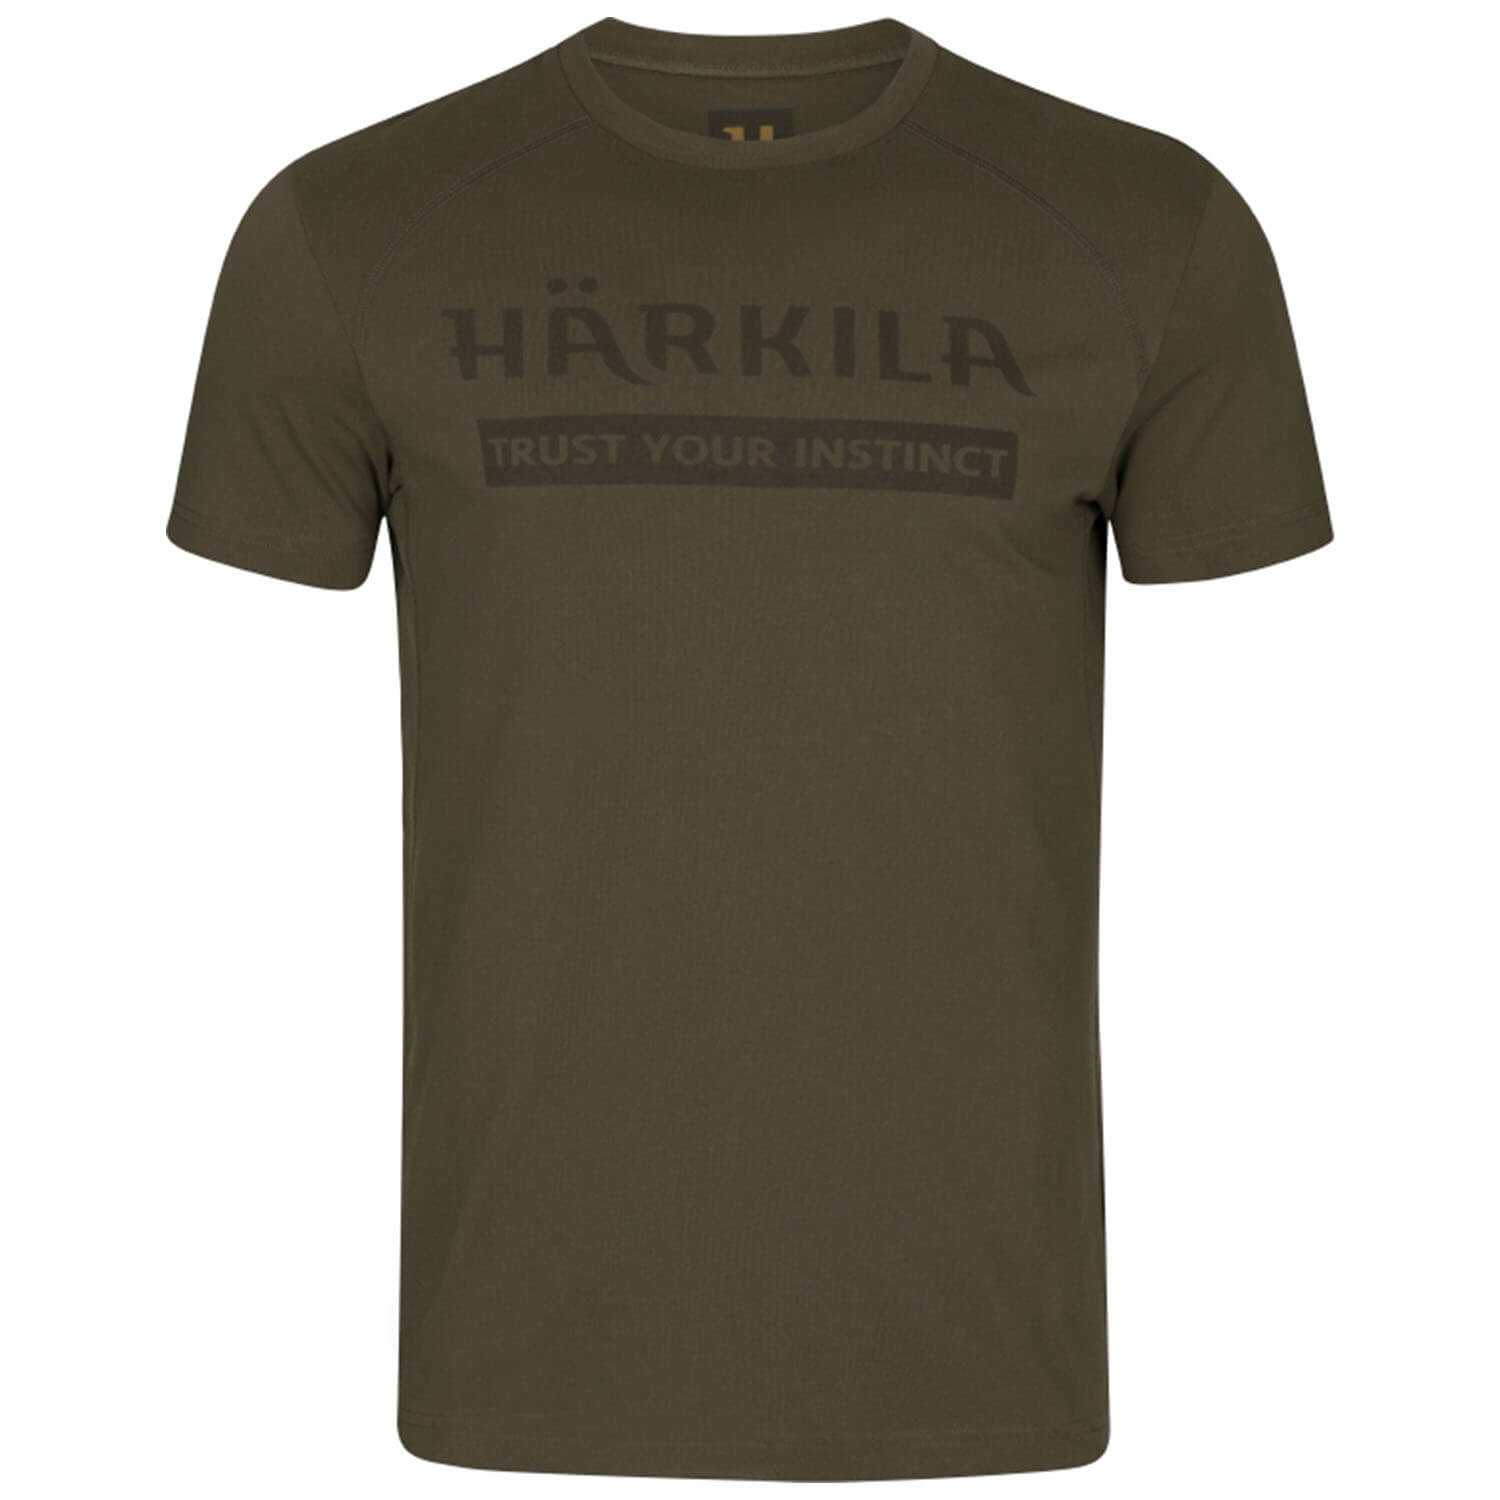  Härkila T-Shirt Logo (Wilgengroen) - Zomer jachtkleding